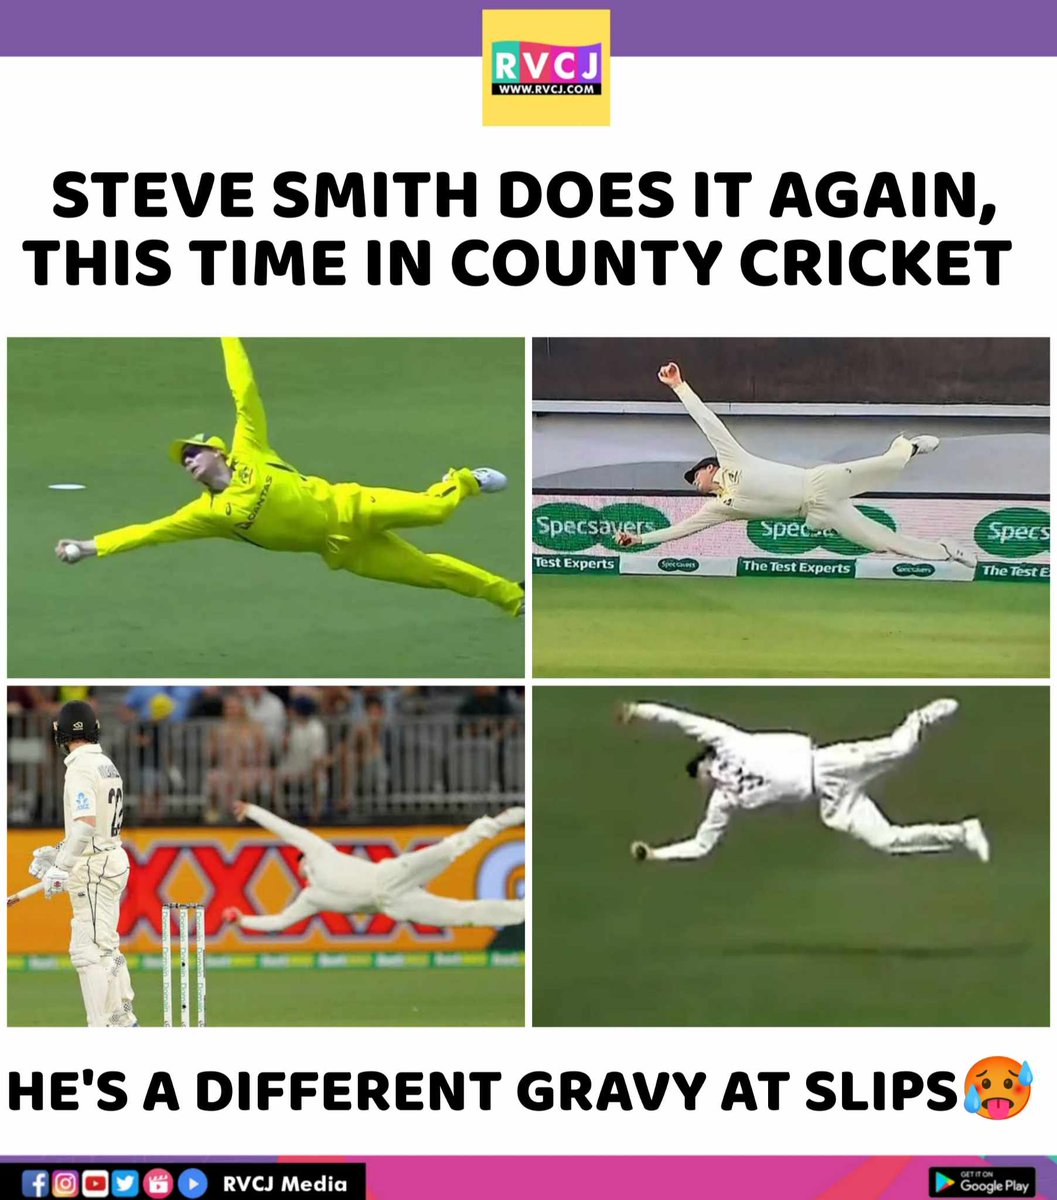 Steve Smith 🔥. 

#SteveSmith #CountyCricket #cricket